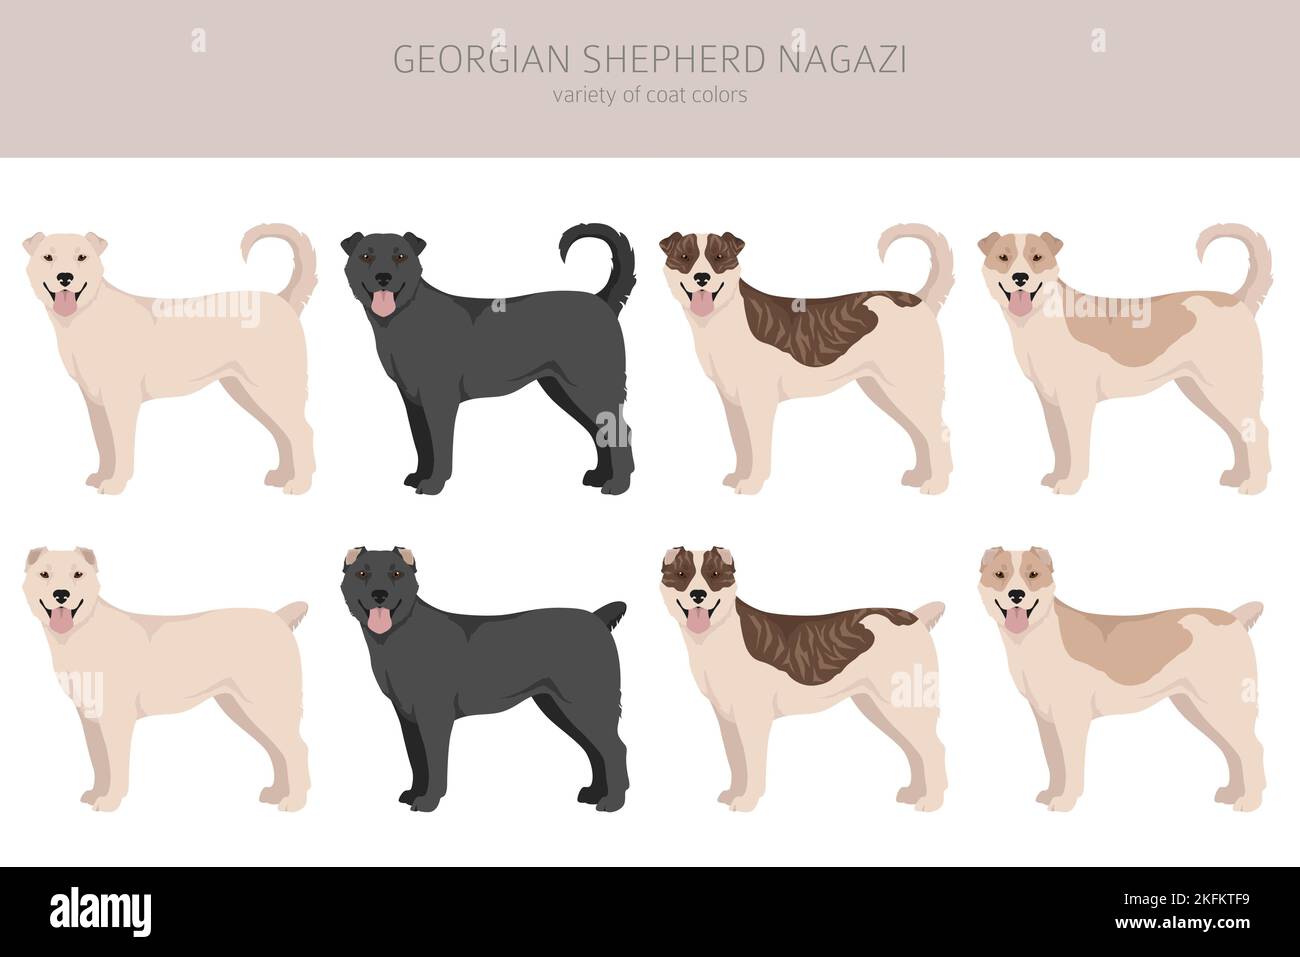 Georgian Shepherd Nagazi clipart. Different coat colors set.  Vector illustration Stock Vector